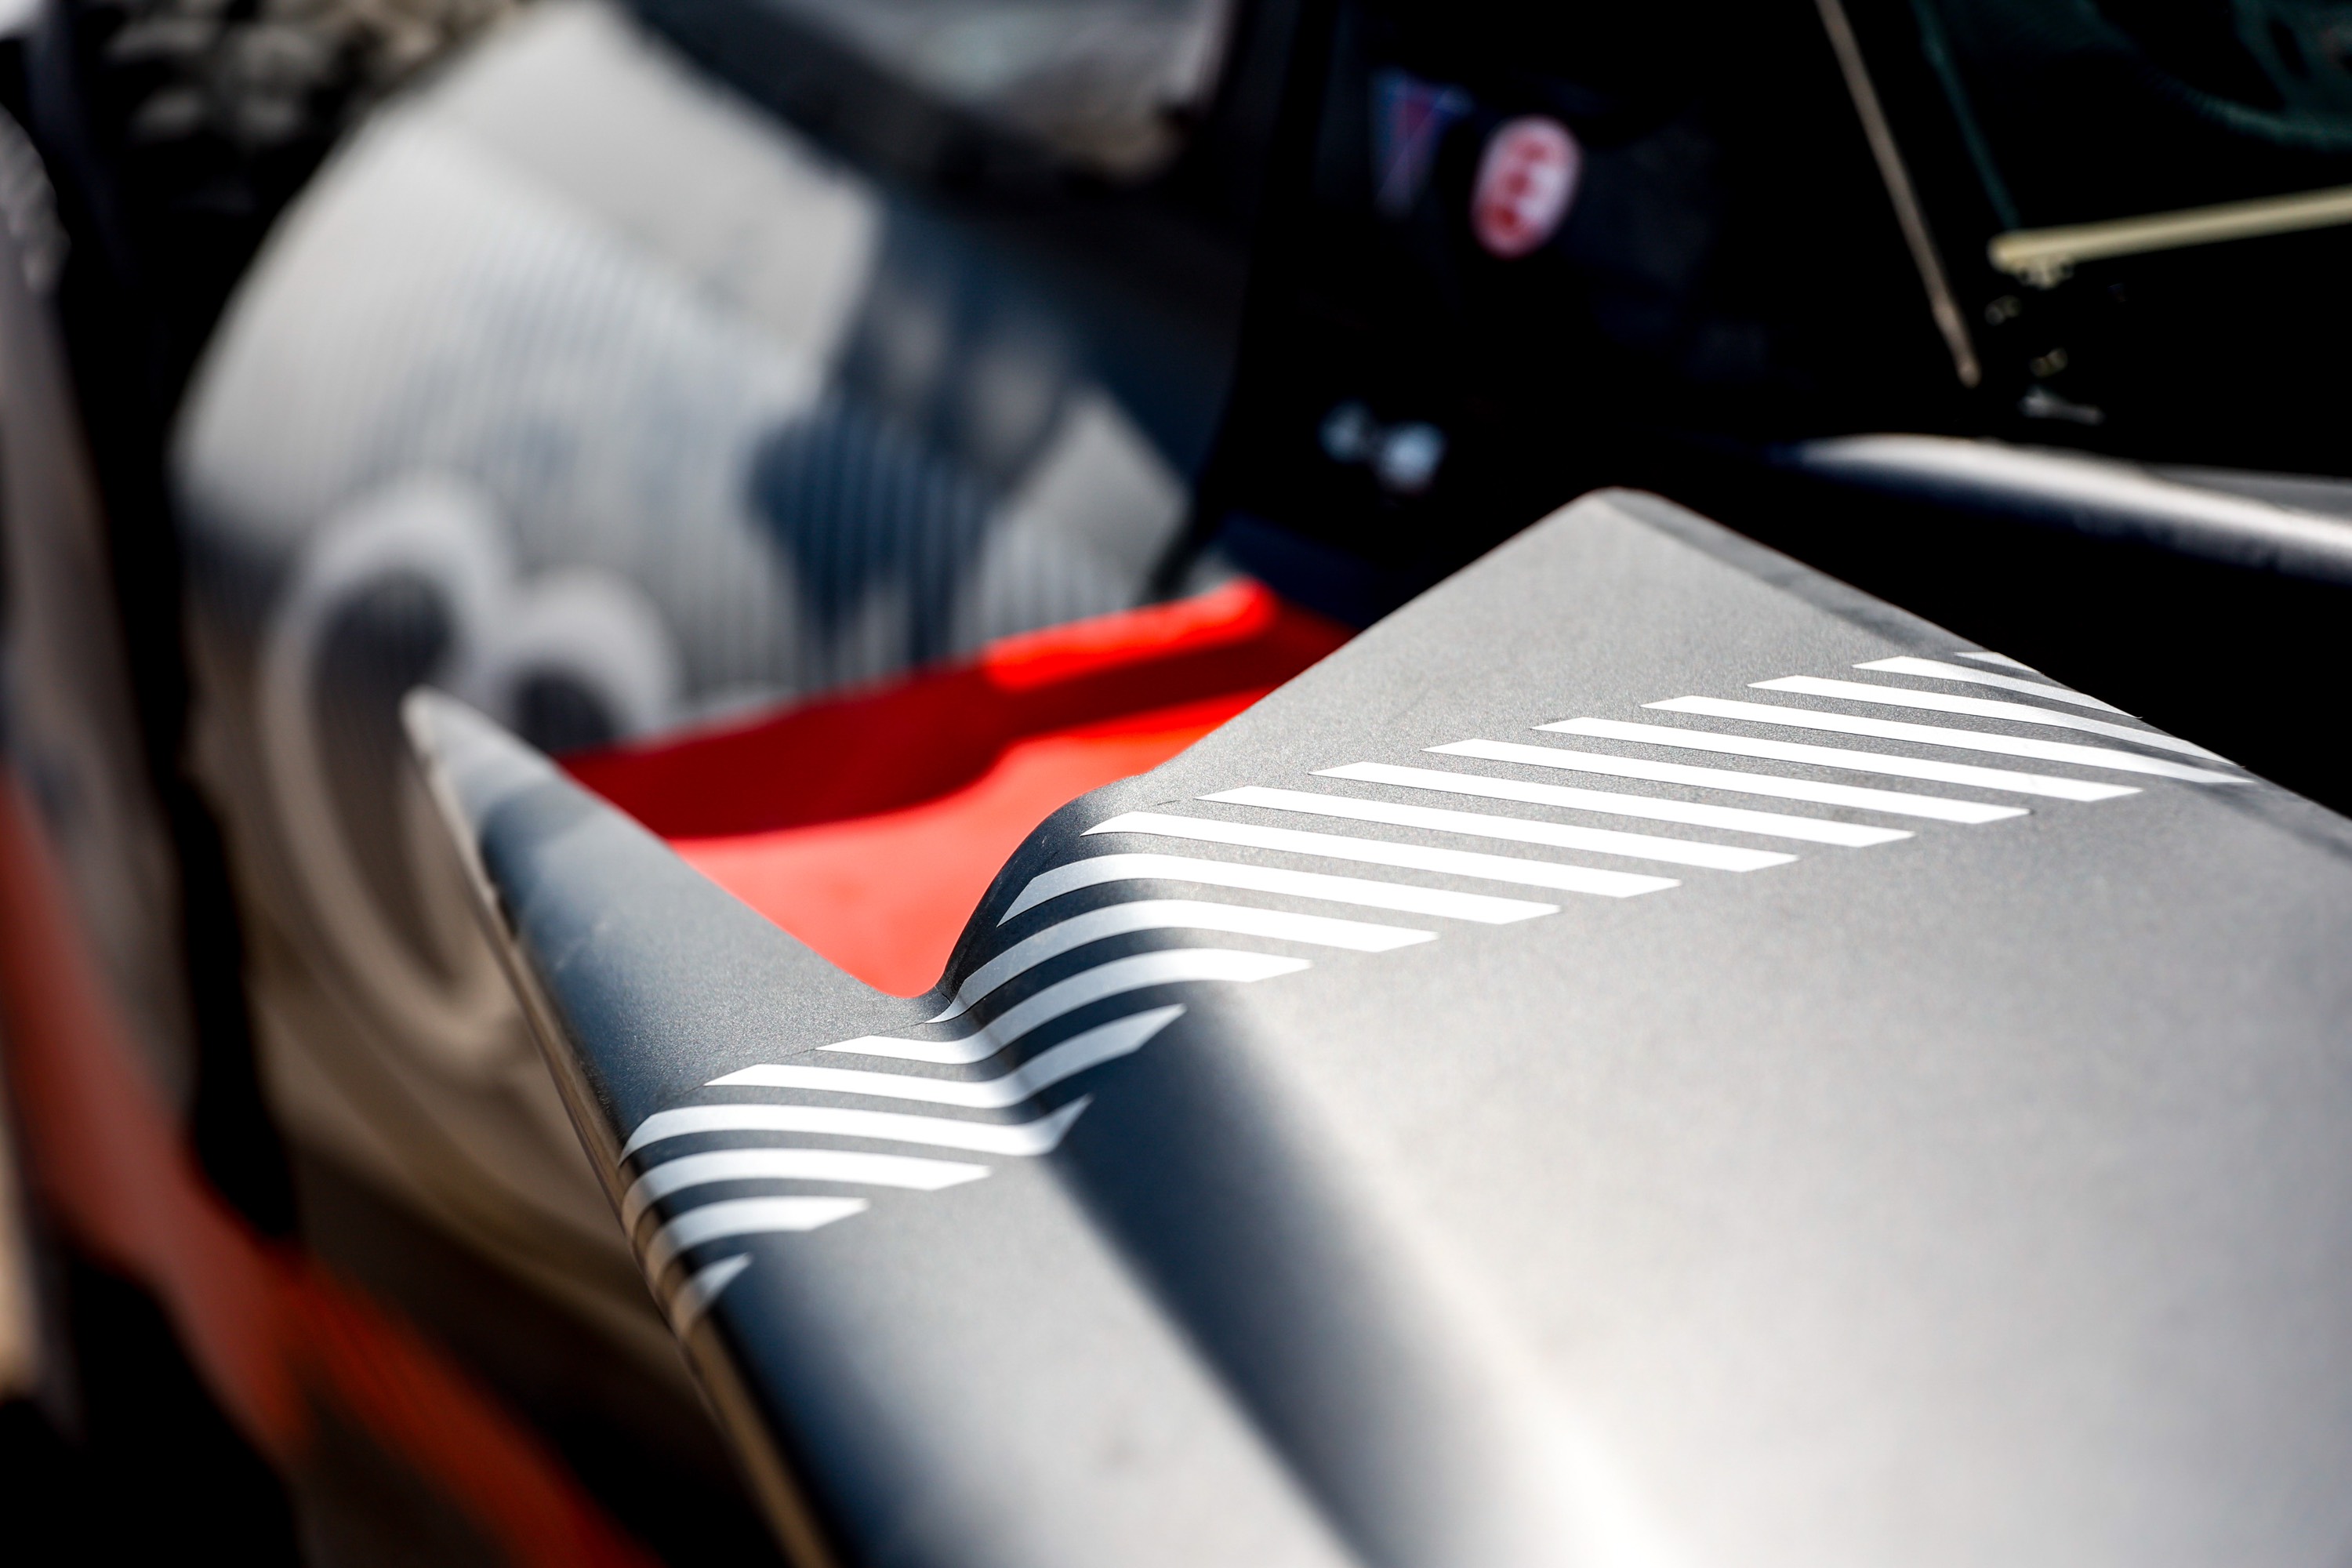 Audi RS Q e-tron E2